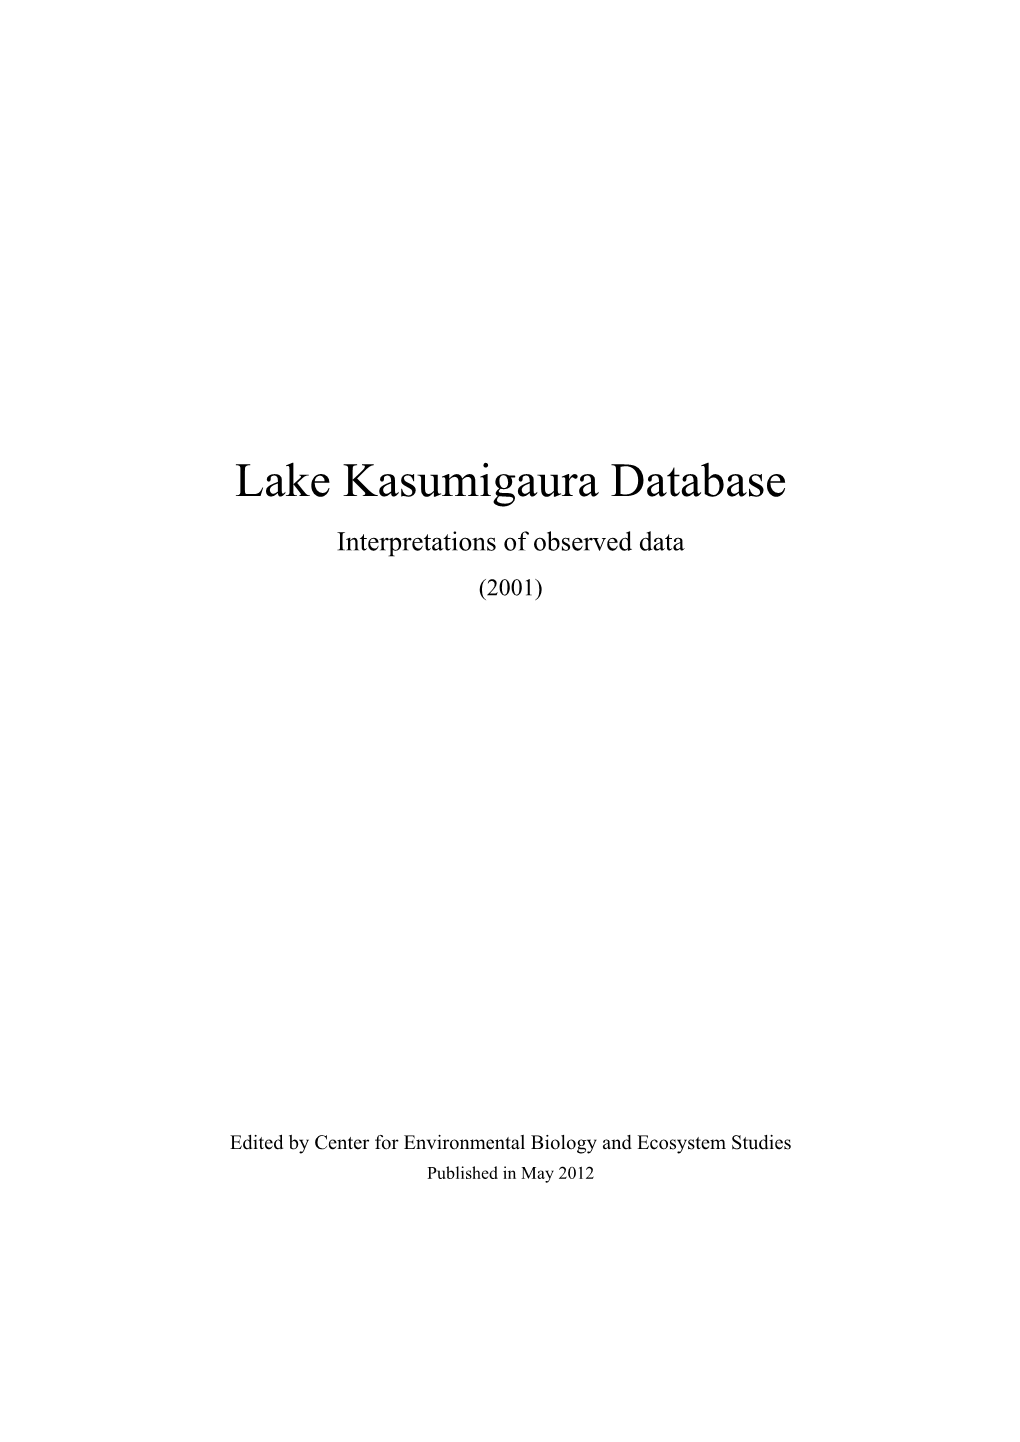 Lake Kasumigaura Database Interpretations of Observed Data (2001)